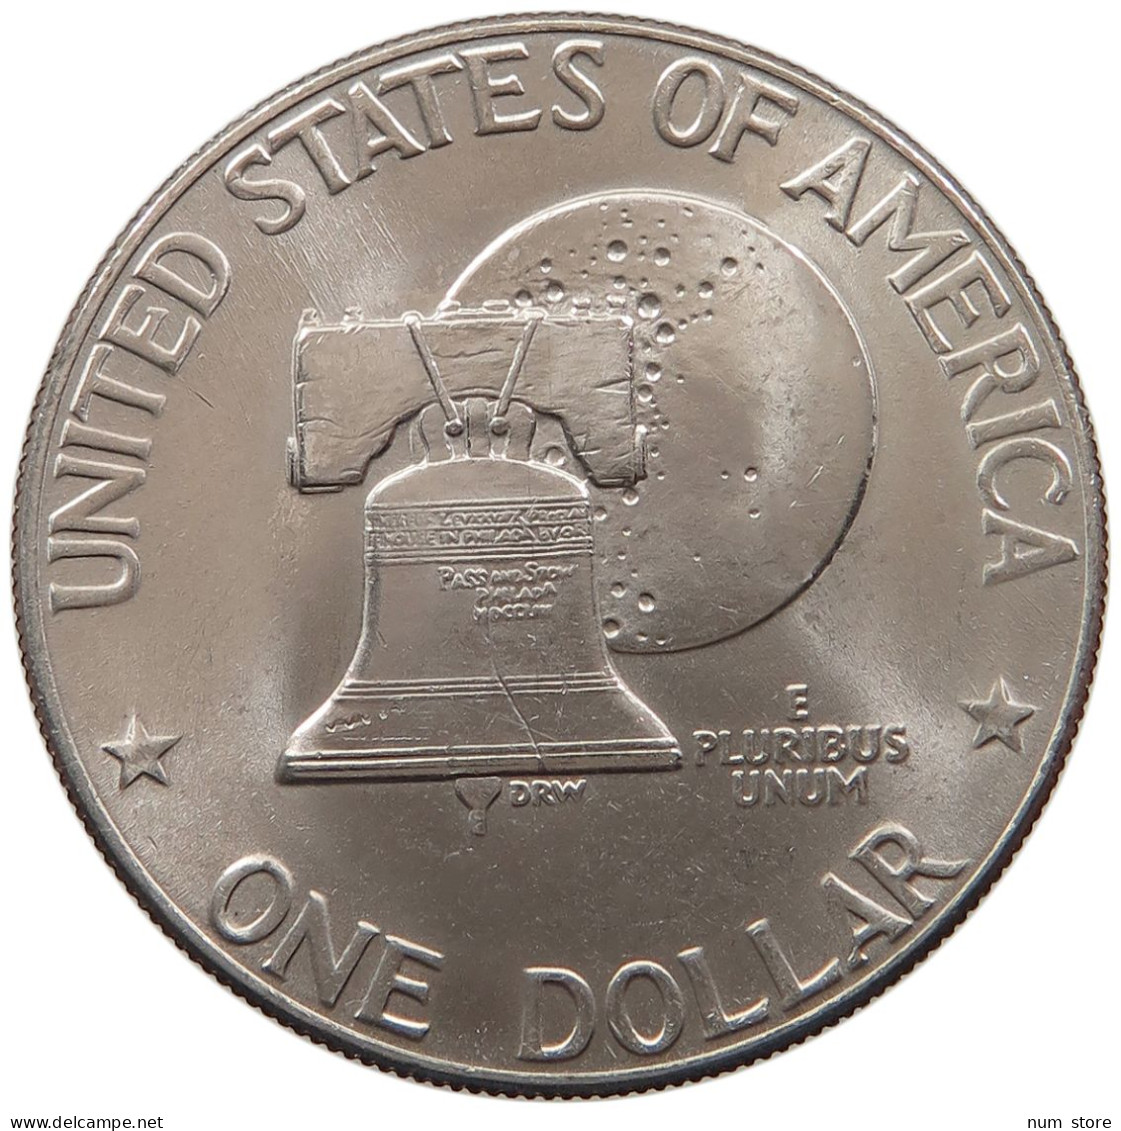 UNITED STATES OF AMERICA DOLLAR 1976 D EISENHOWER #alb065 0419 - 1971-1978: Eisenhower